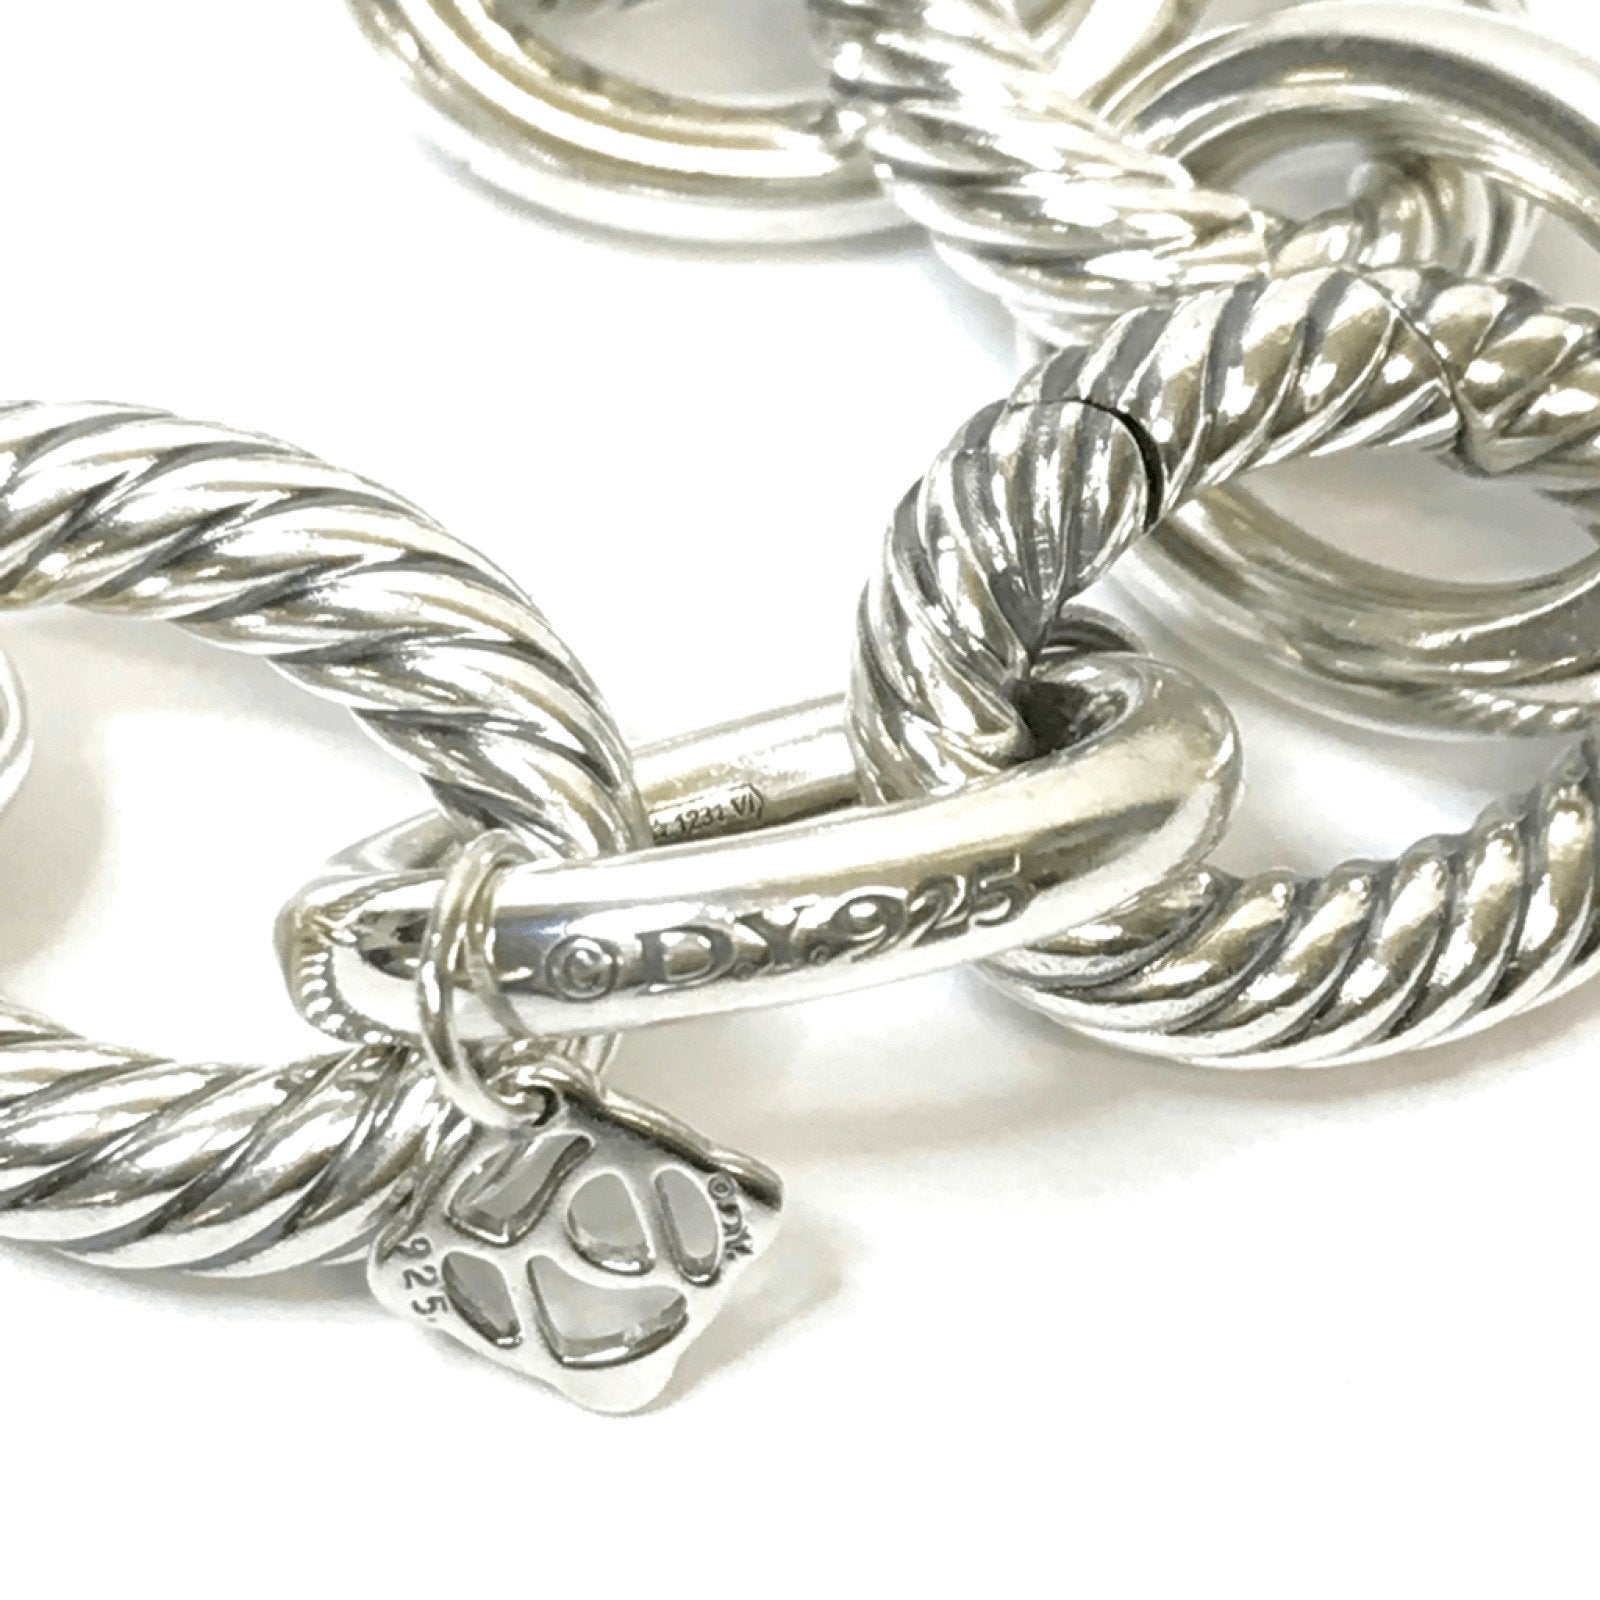 David Yurman Oval Link Chain Bracelet in Silver with 18K Gold, 12mm |  Neiman Marcus